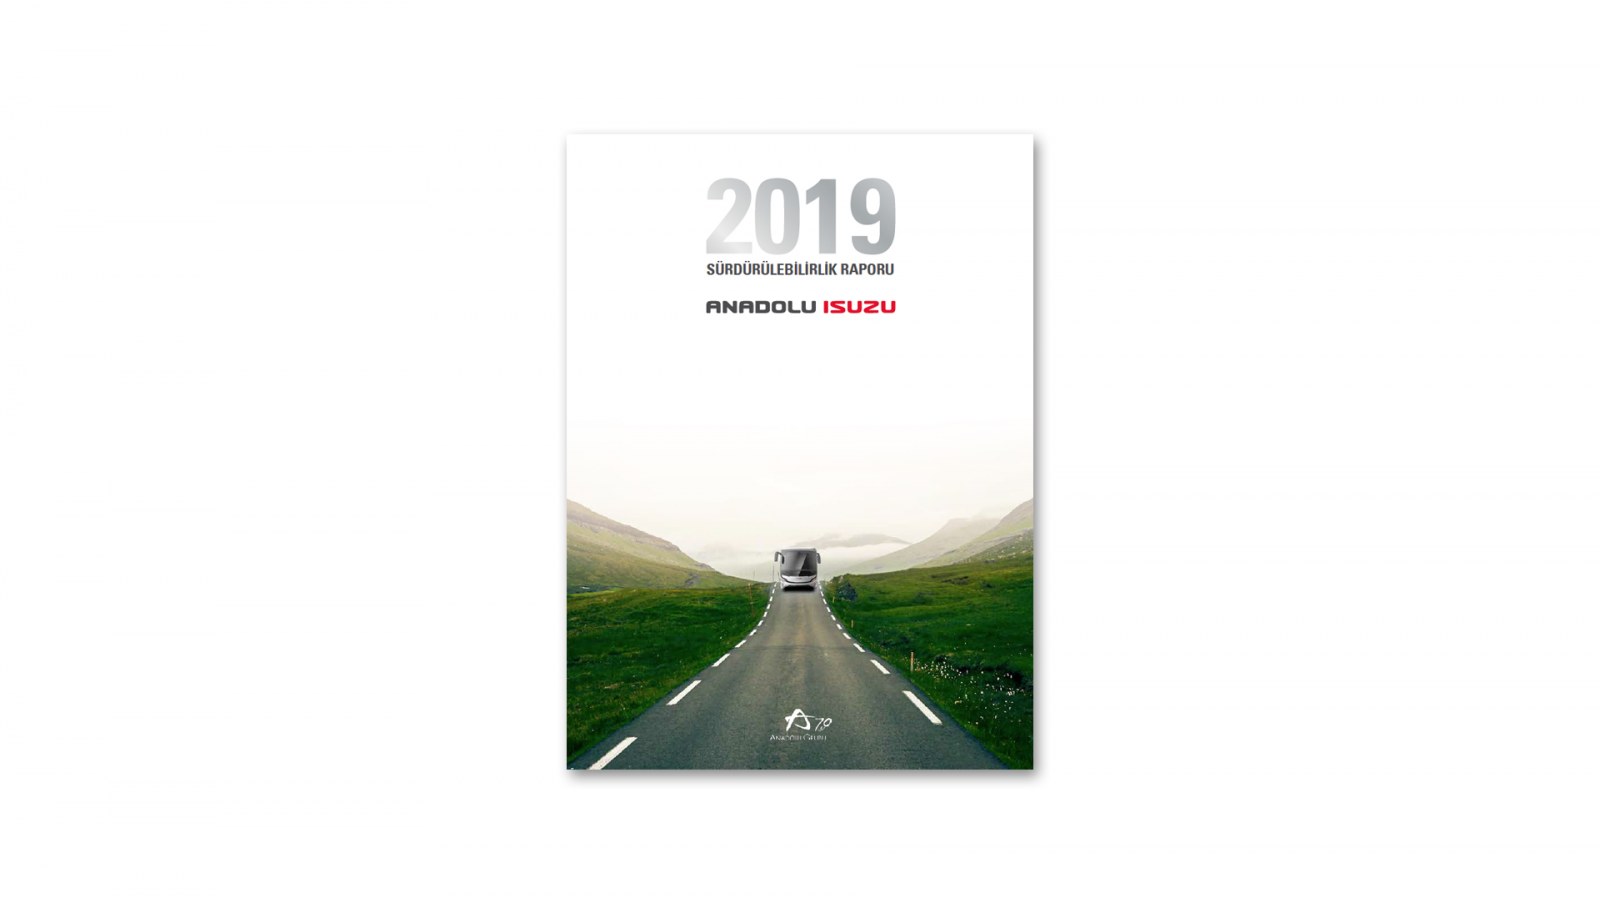 ANADOLU ISUZU / 2019 Sürdürülebilirlik Raporu / 2019 Sustainability Report